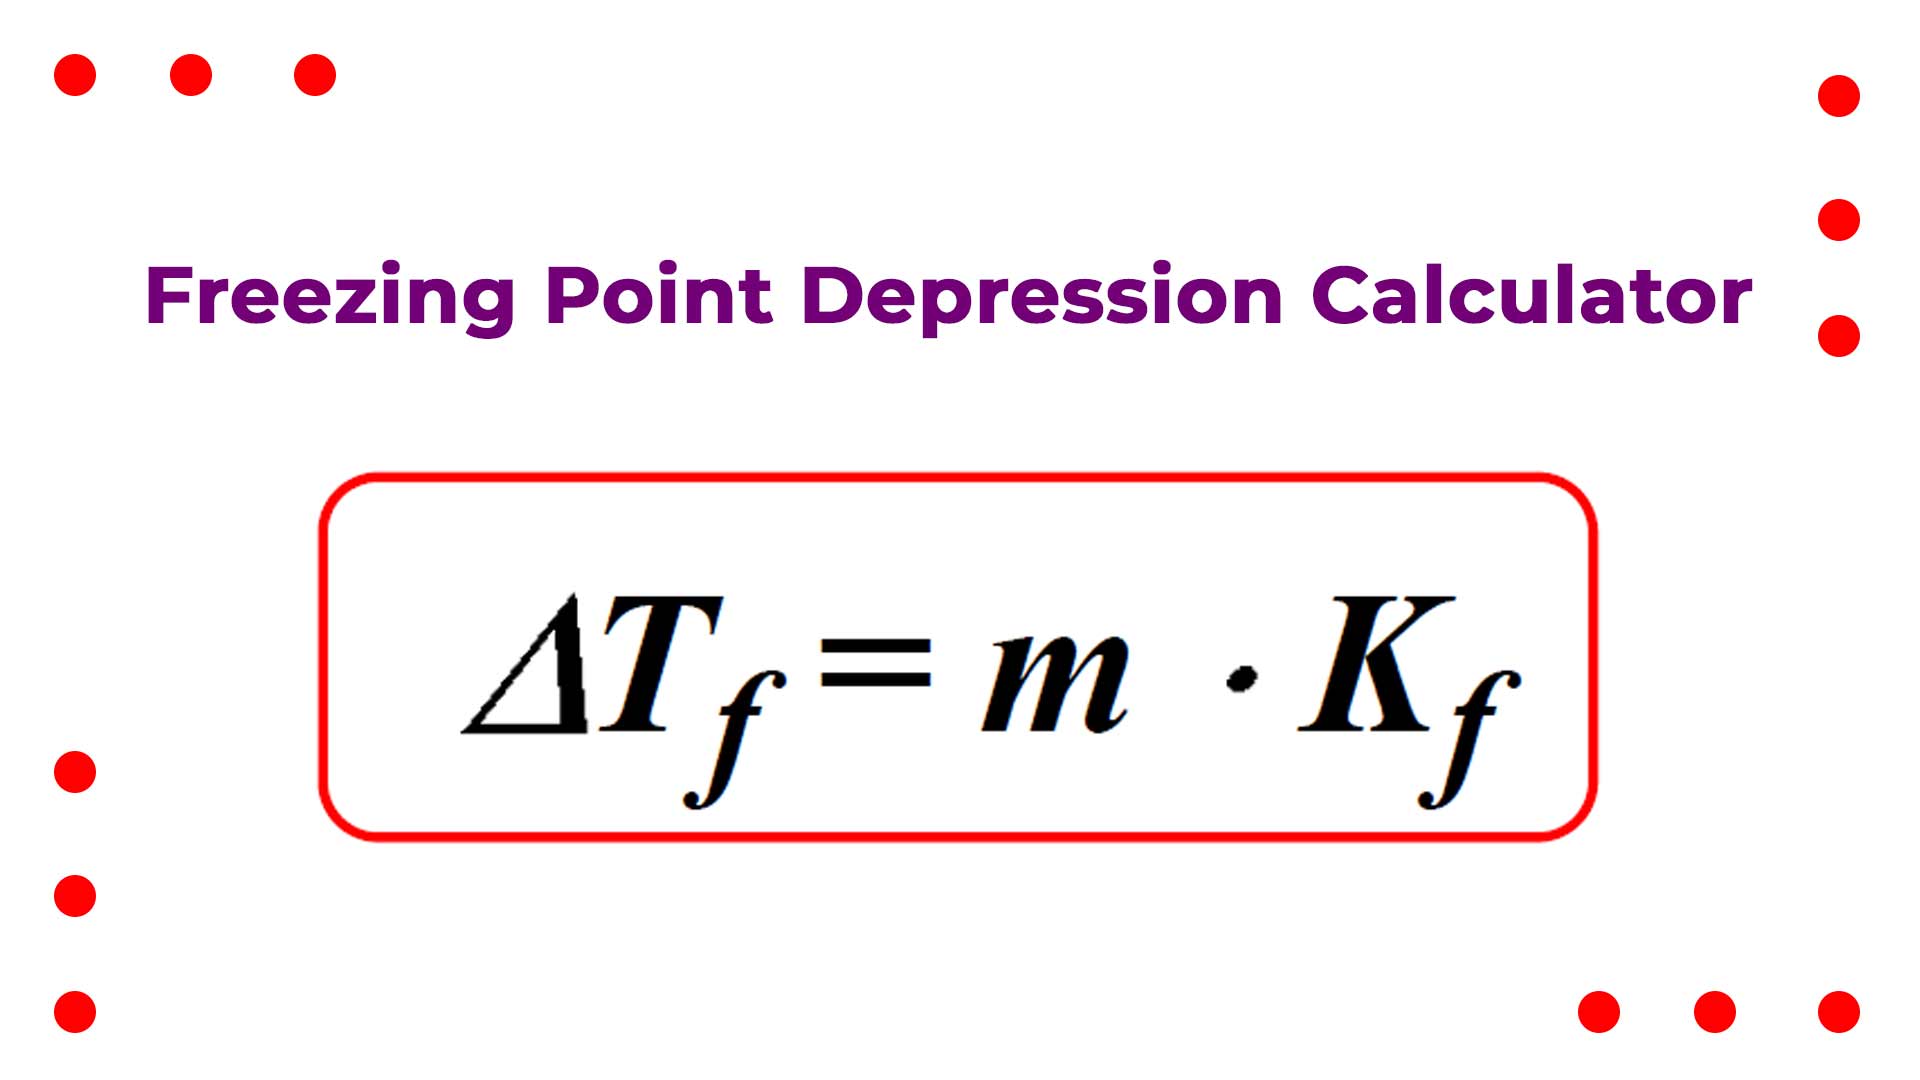 Freezing Point Depression Calculator